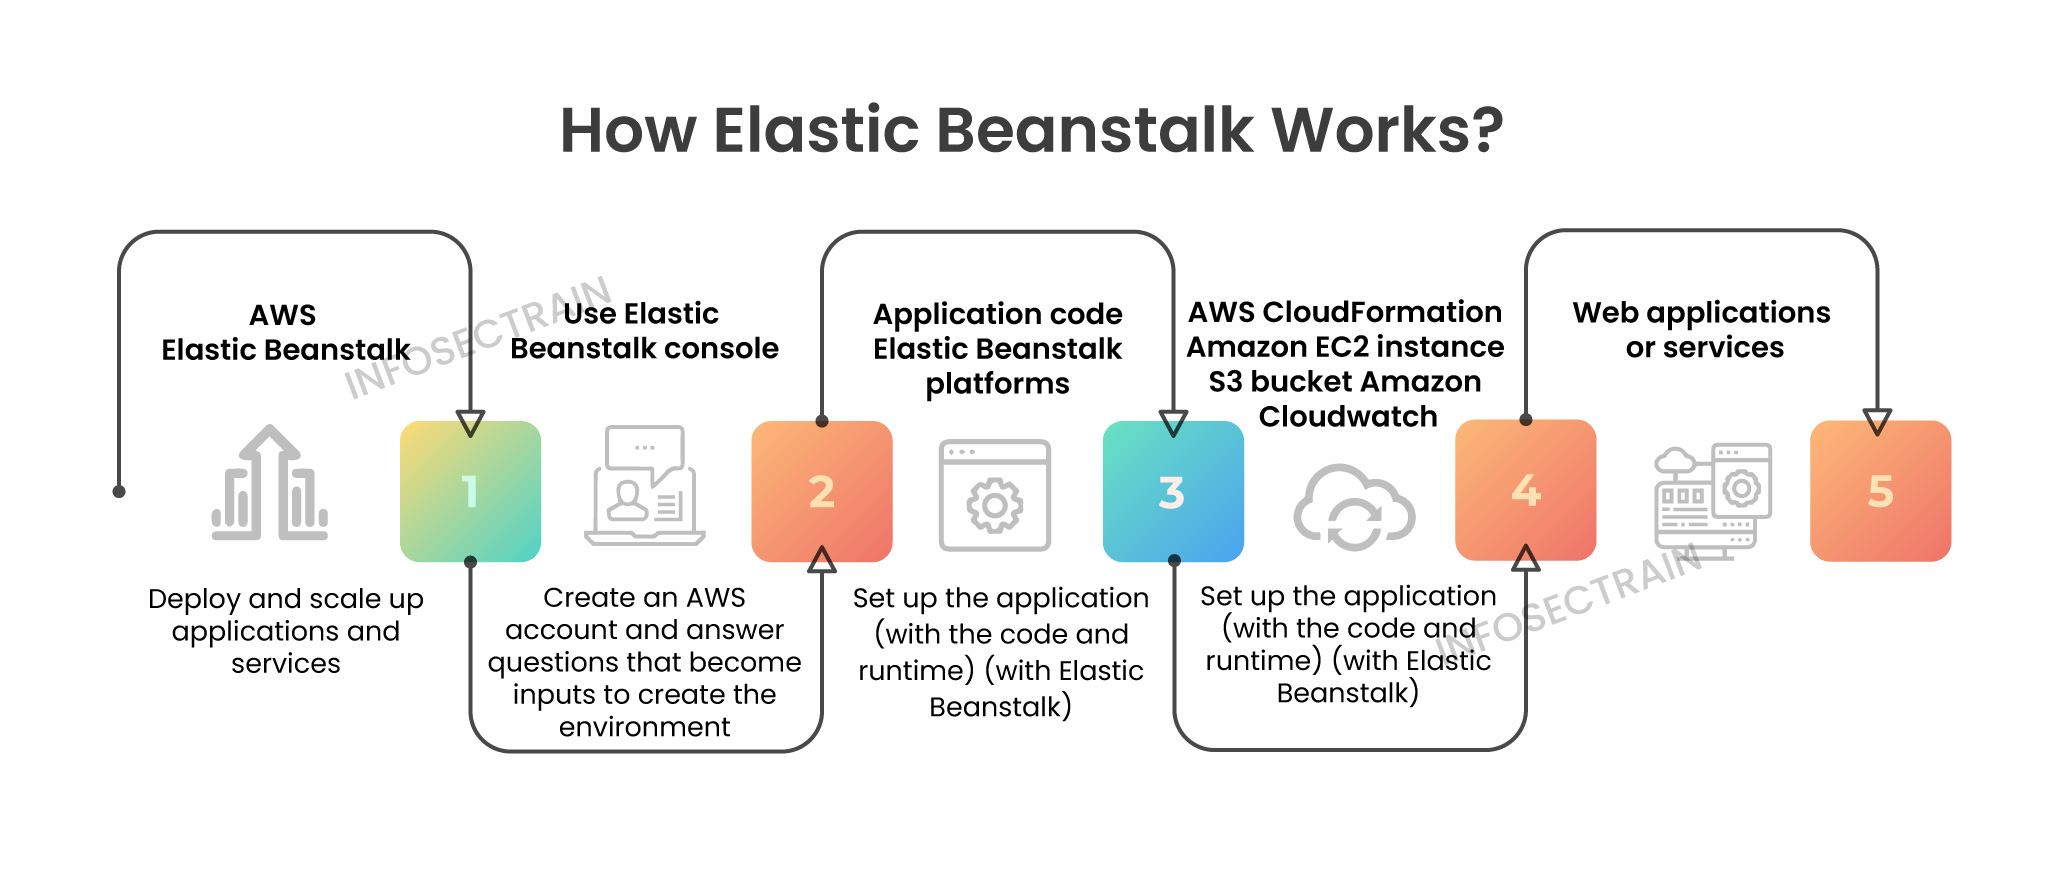 How Does Elastic Beanstalk Work